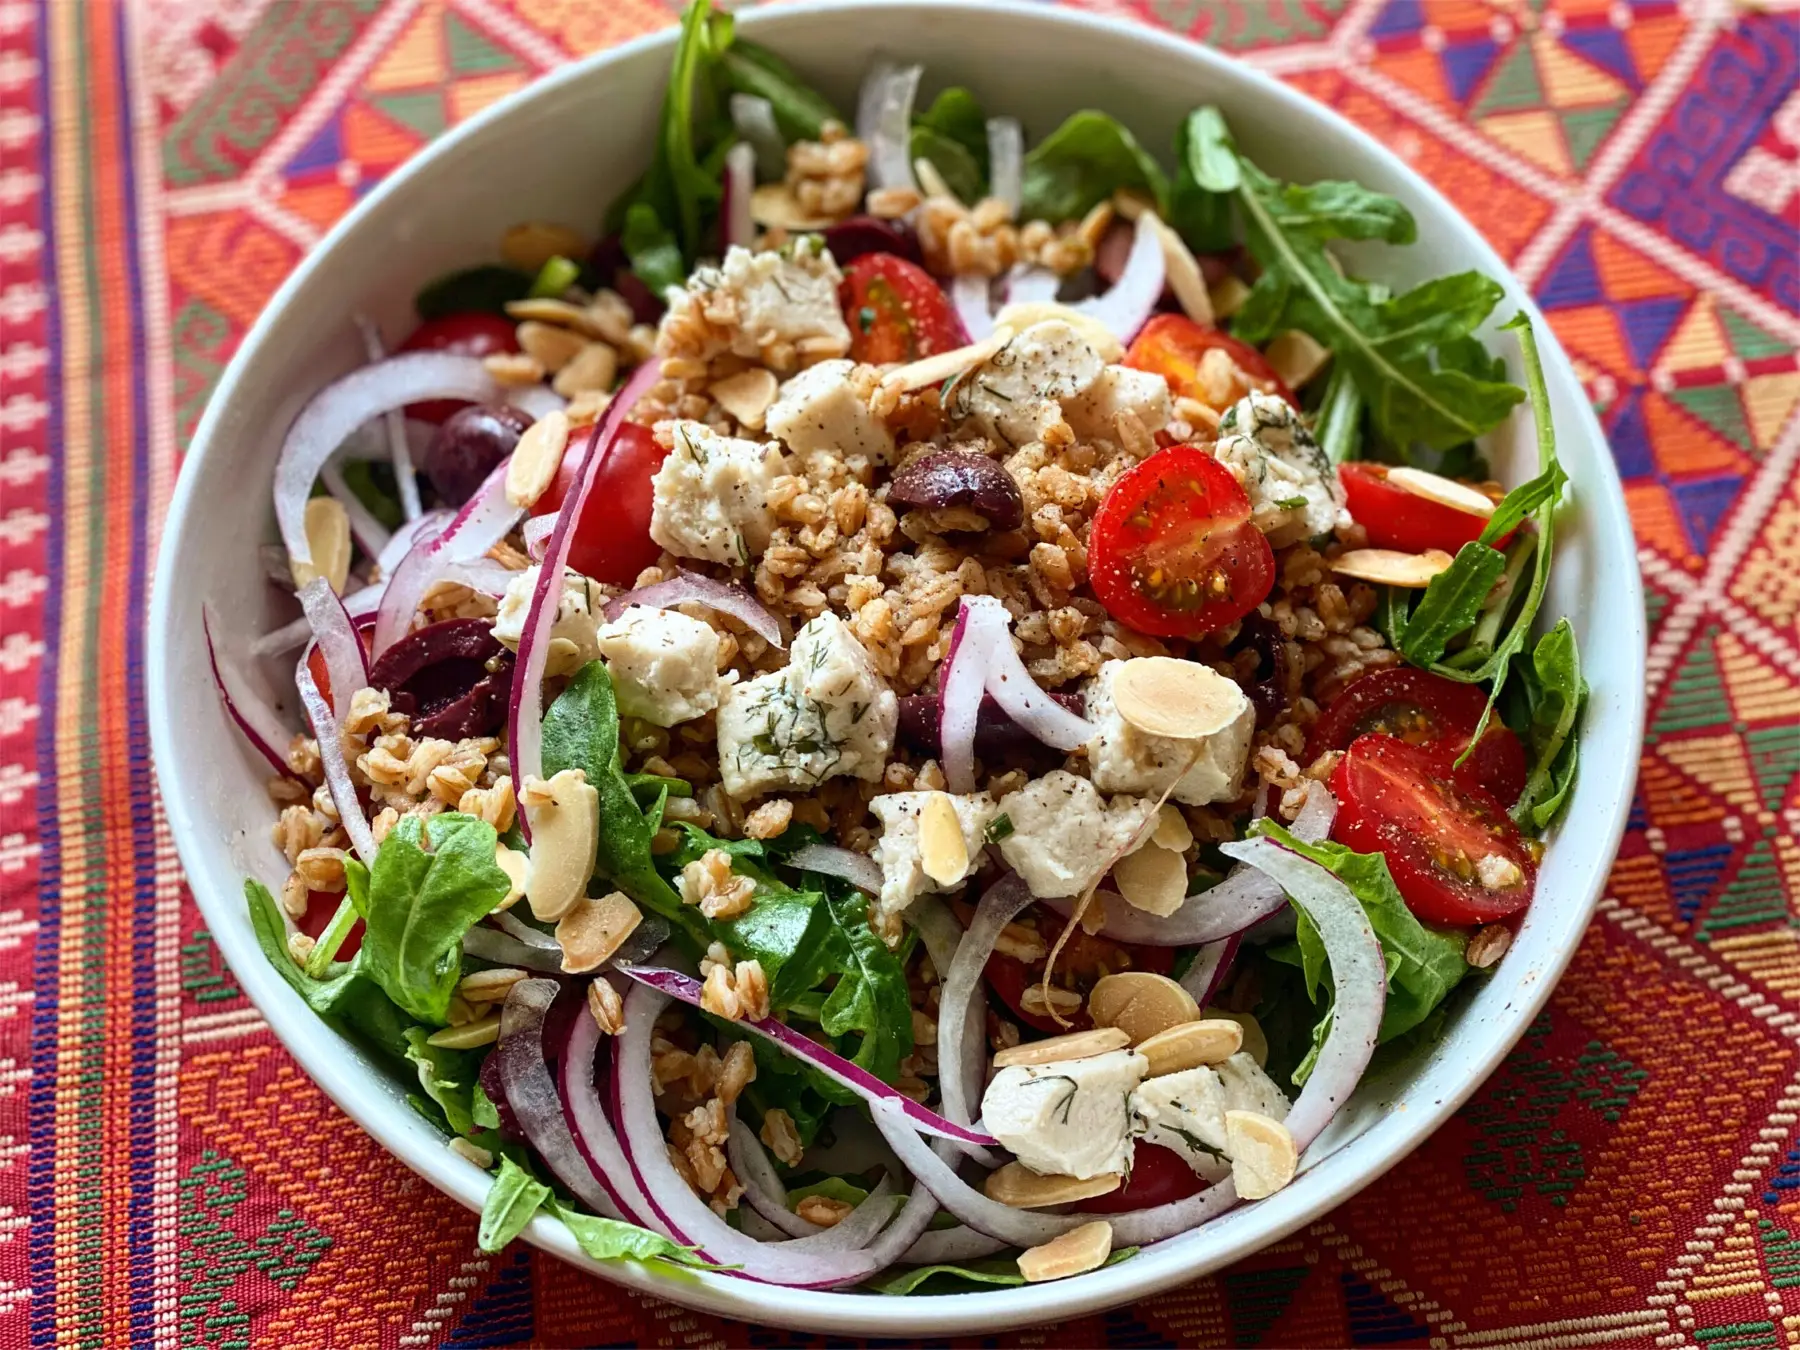 Featured image for “Warm Farro and Arugula Salad”